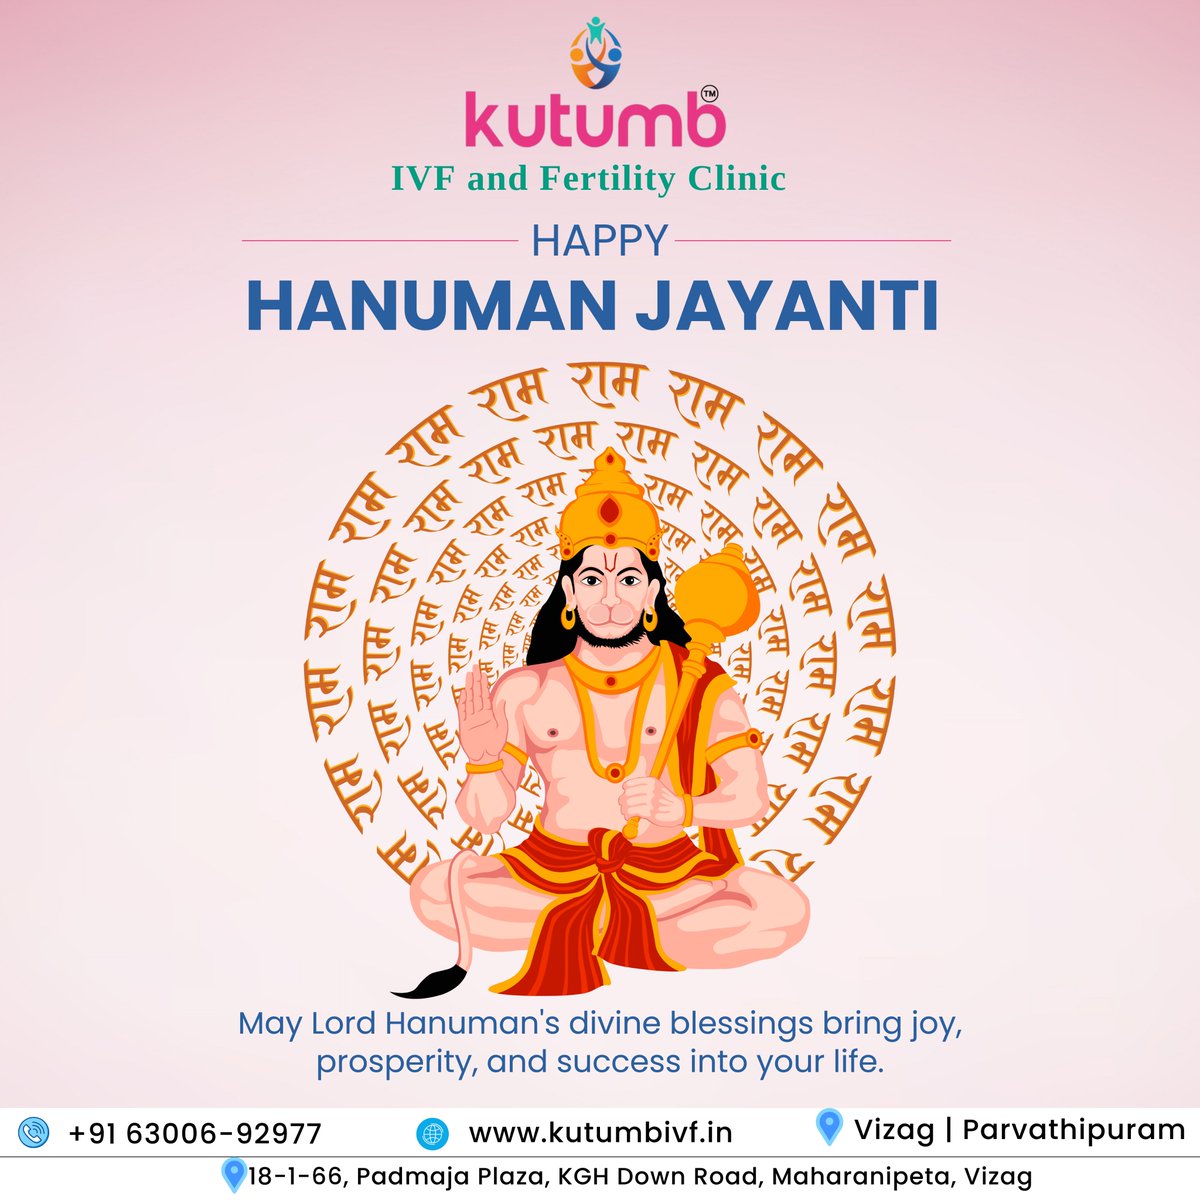 Kutumb IVF wishes you a blessed Hanuman Jayanti!
#HappyHanumanJayanti #hanumanjayanti #jaishriram #kutumb #vizagivf #visakhapatnam #kutumbivf #vizag